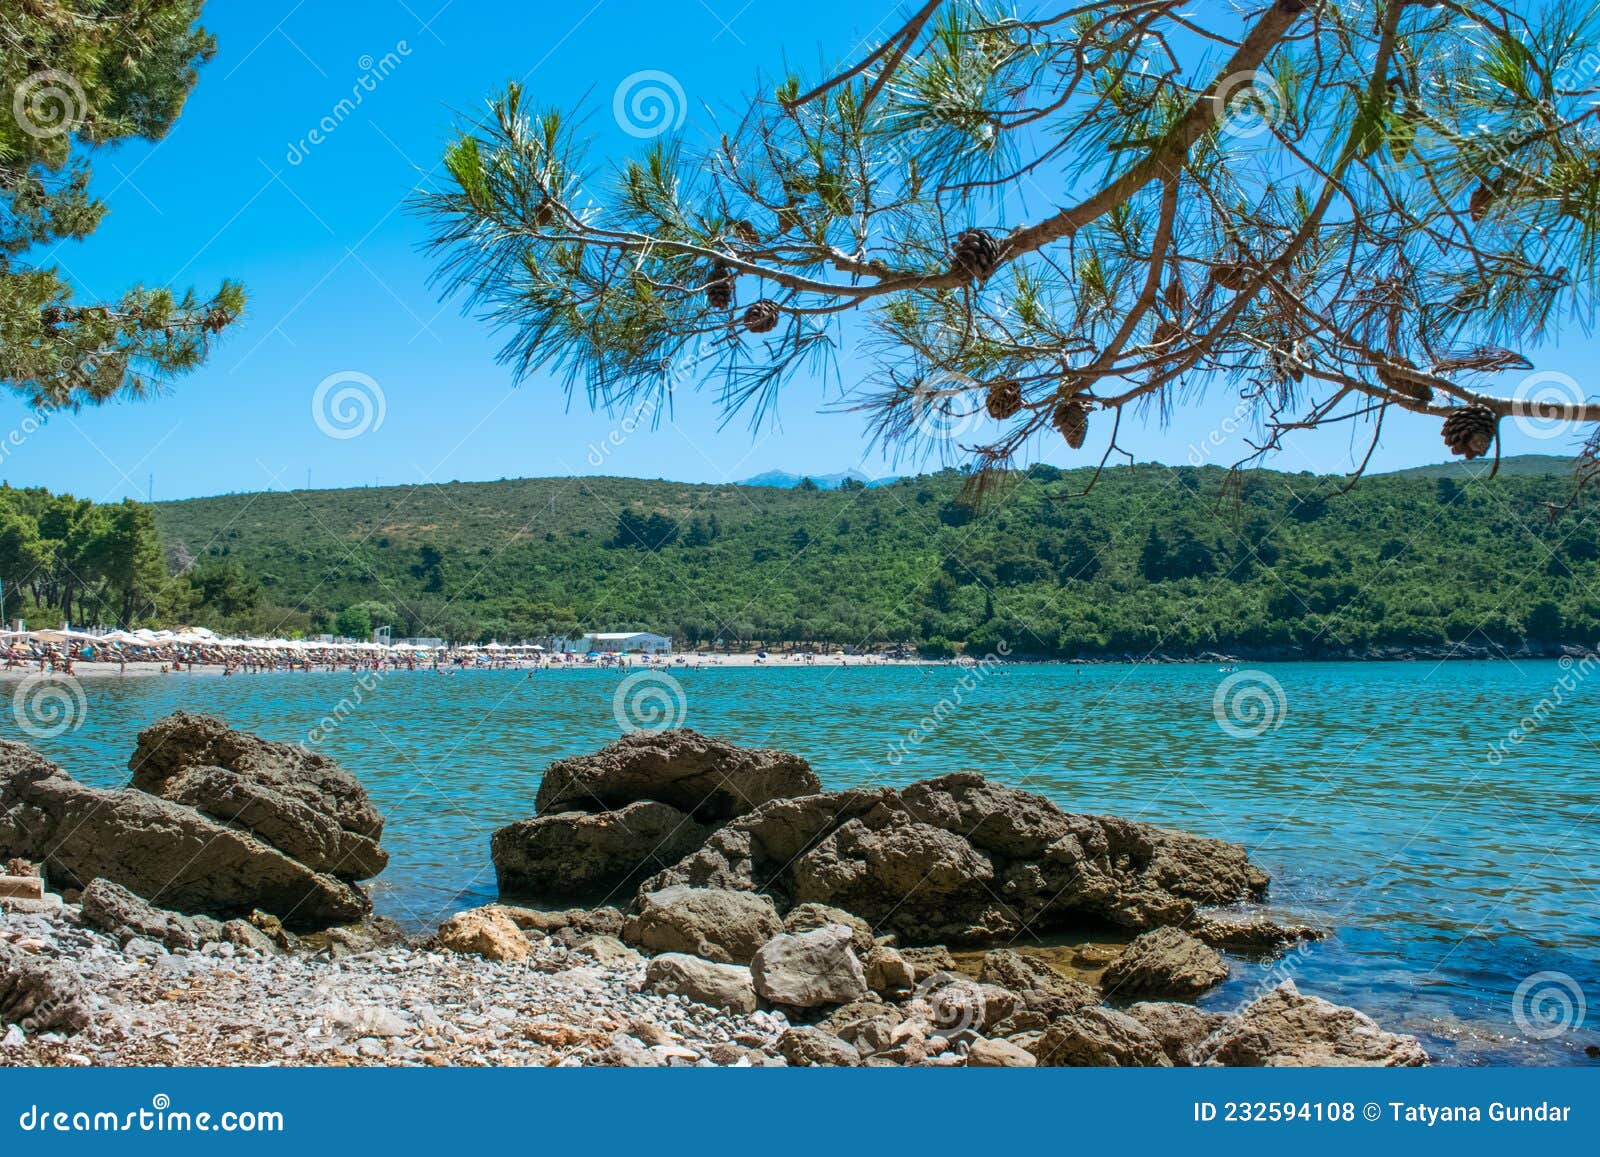 plavi horizonti beach landscape. radovici. tivat bay. montenegro. sandy clearest water beach excellent for kids